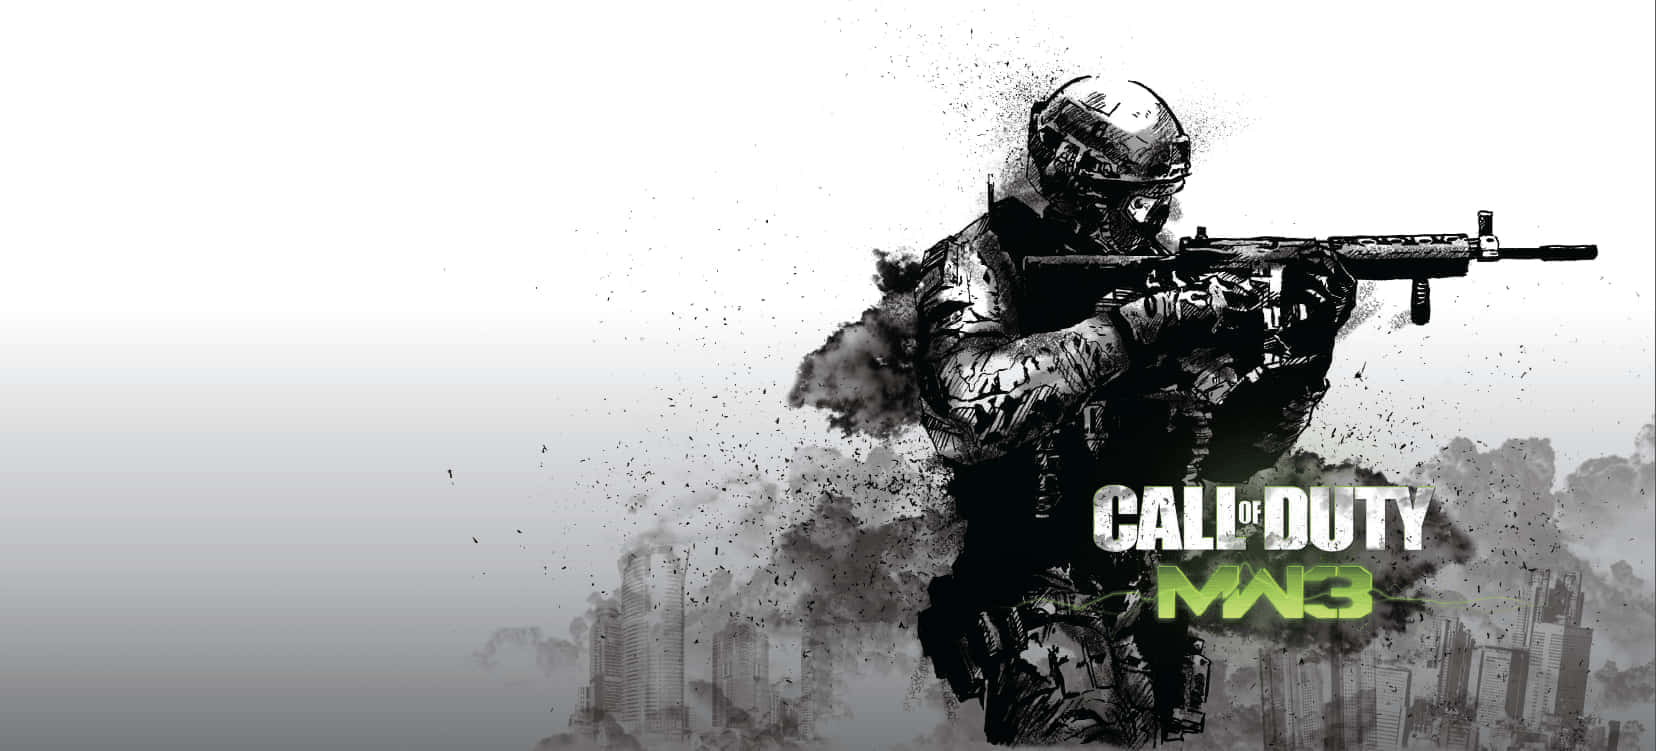 Callof Duty M W3 Soldier Artwork Wallpaper